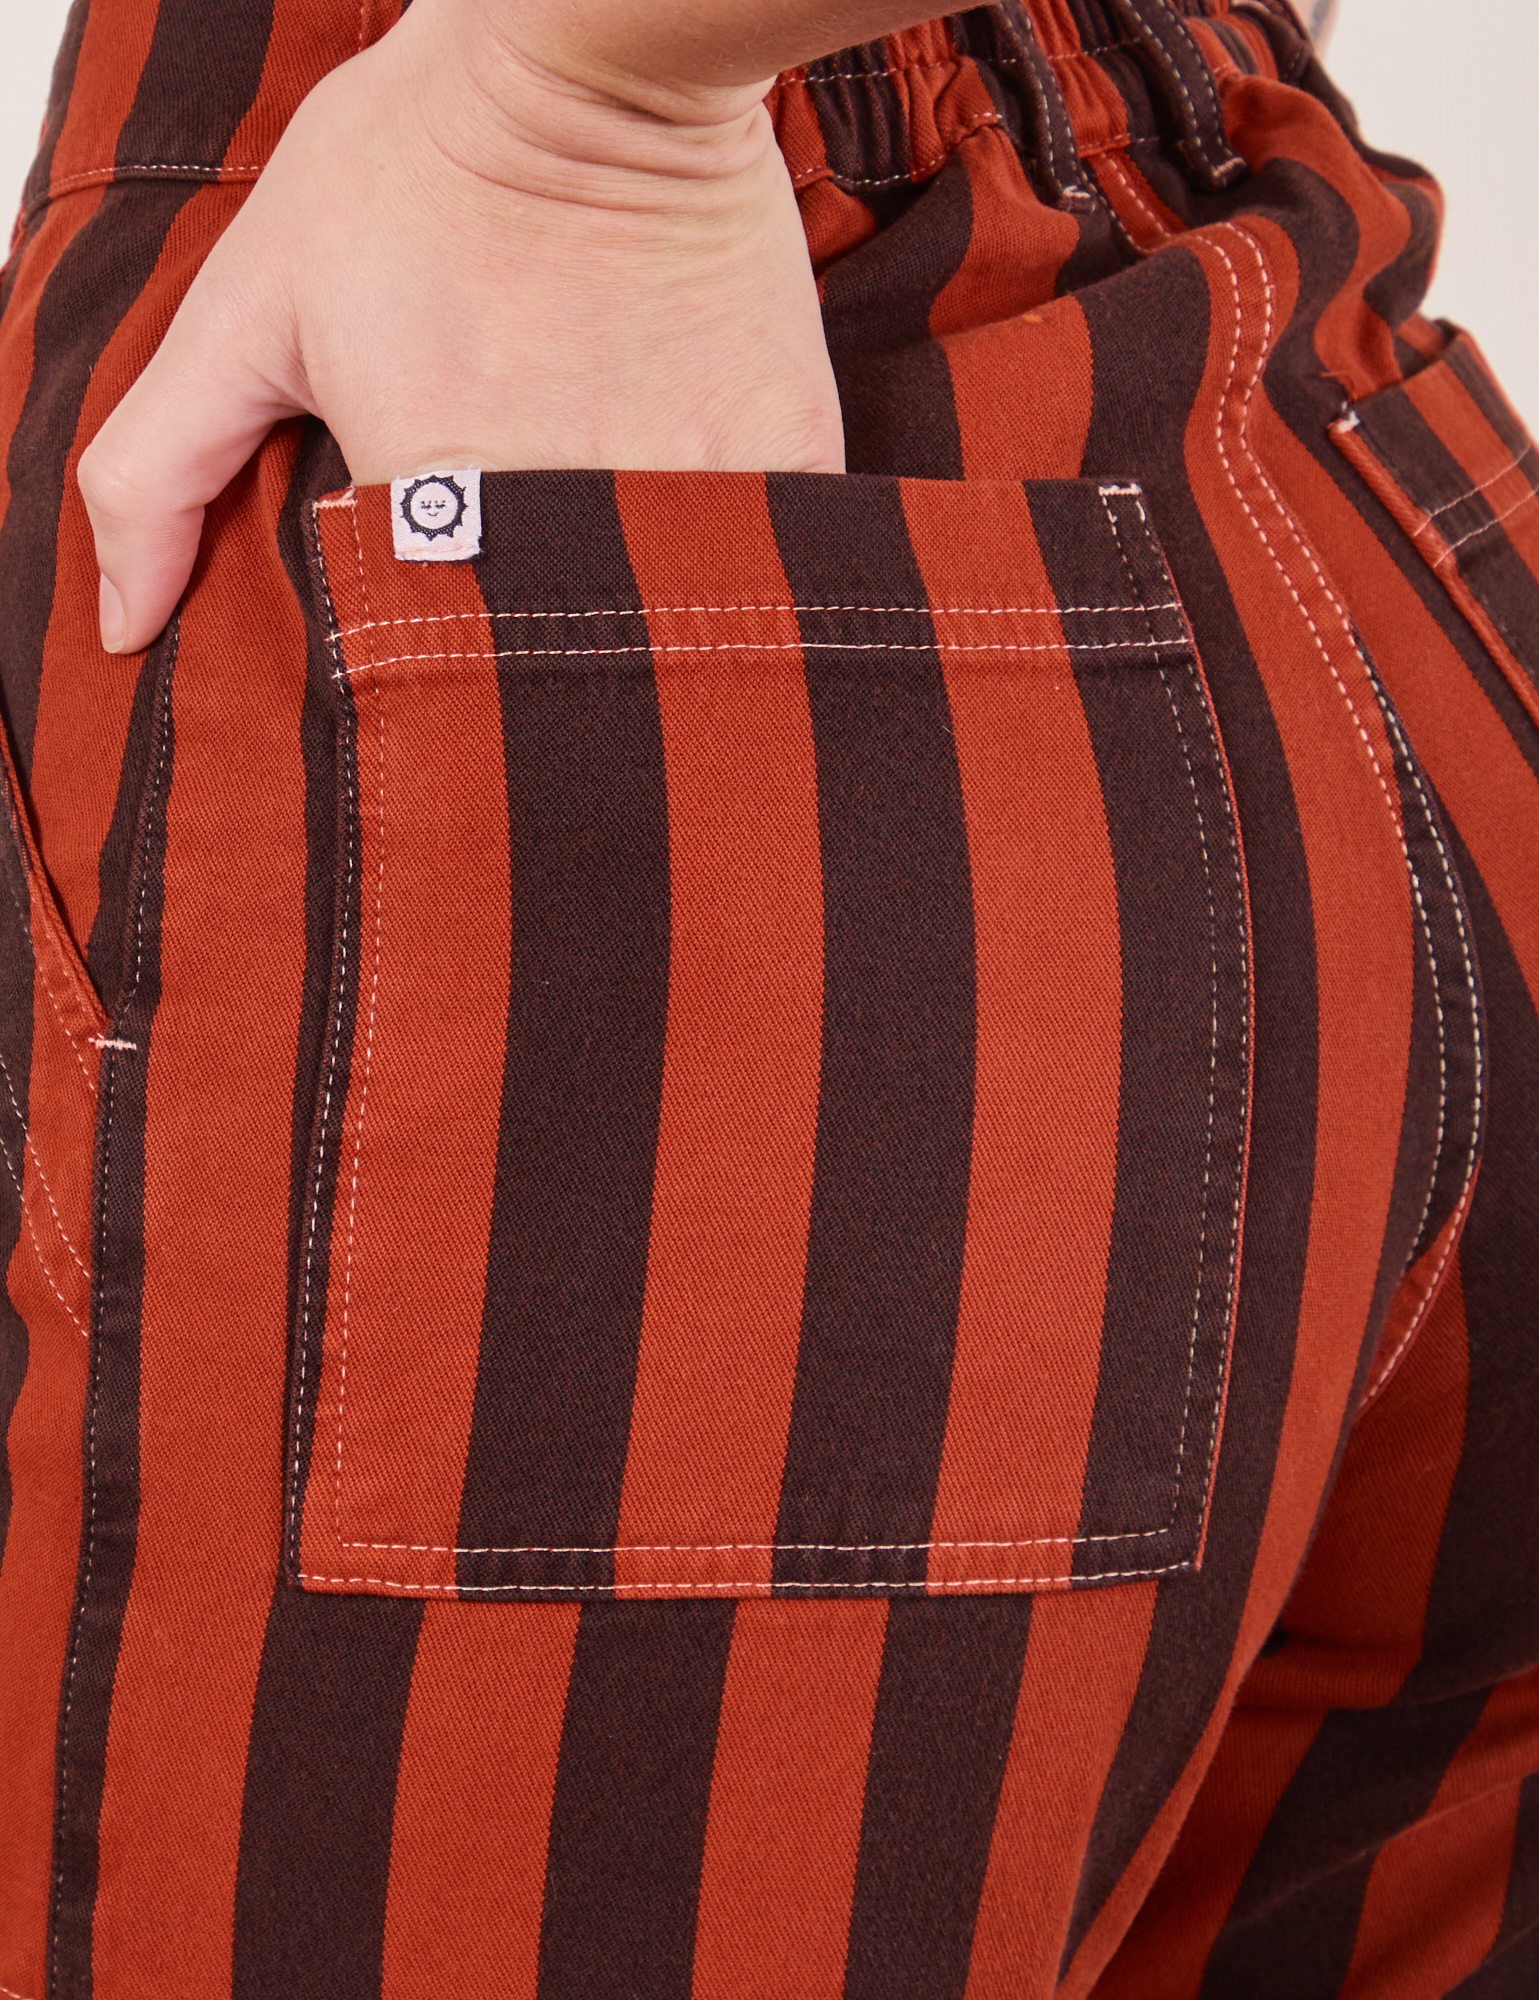 Black Striped Work Pants in Paprika back pocket close up. Alex has her hand in the pocket.